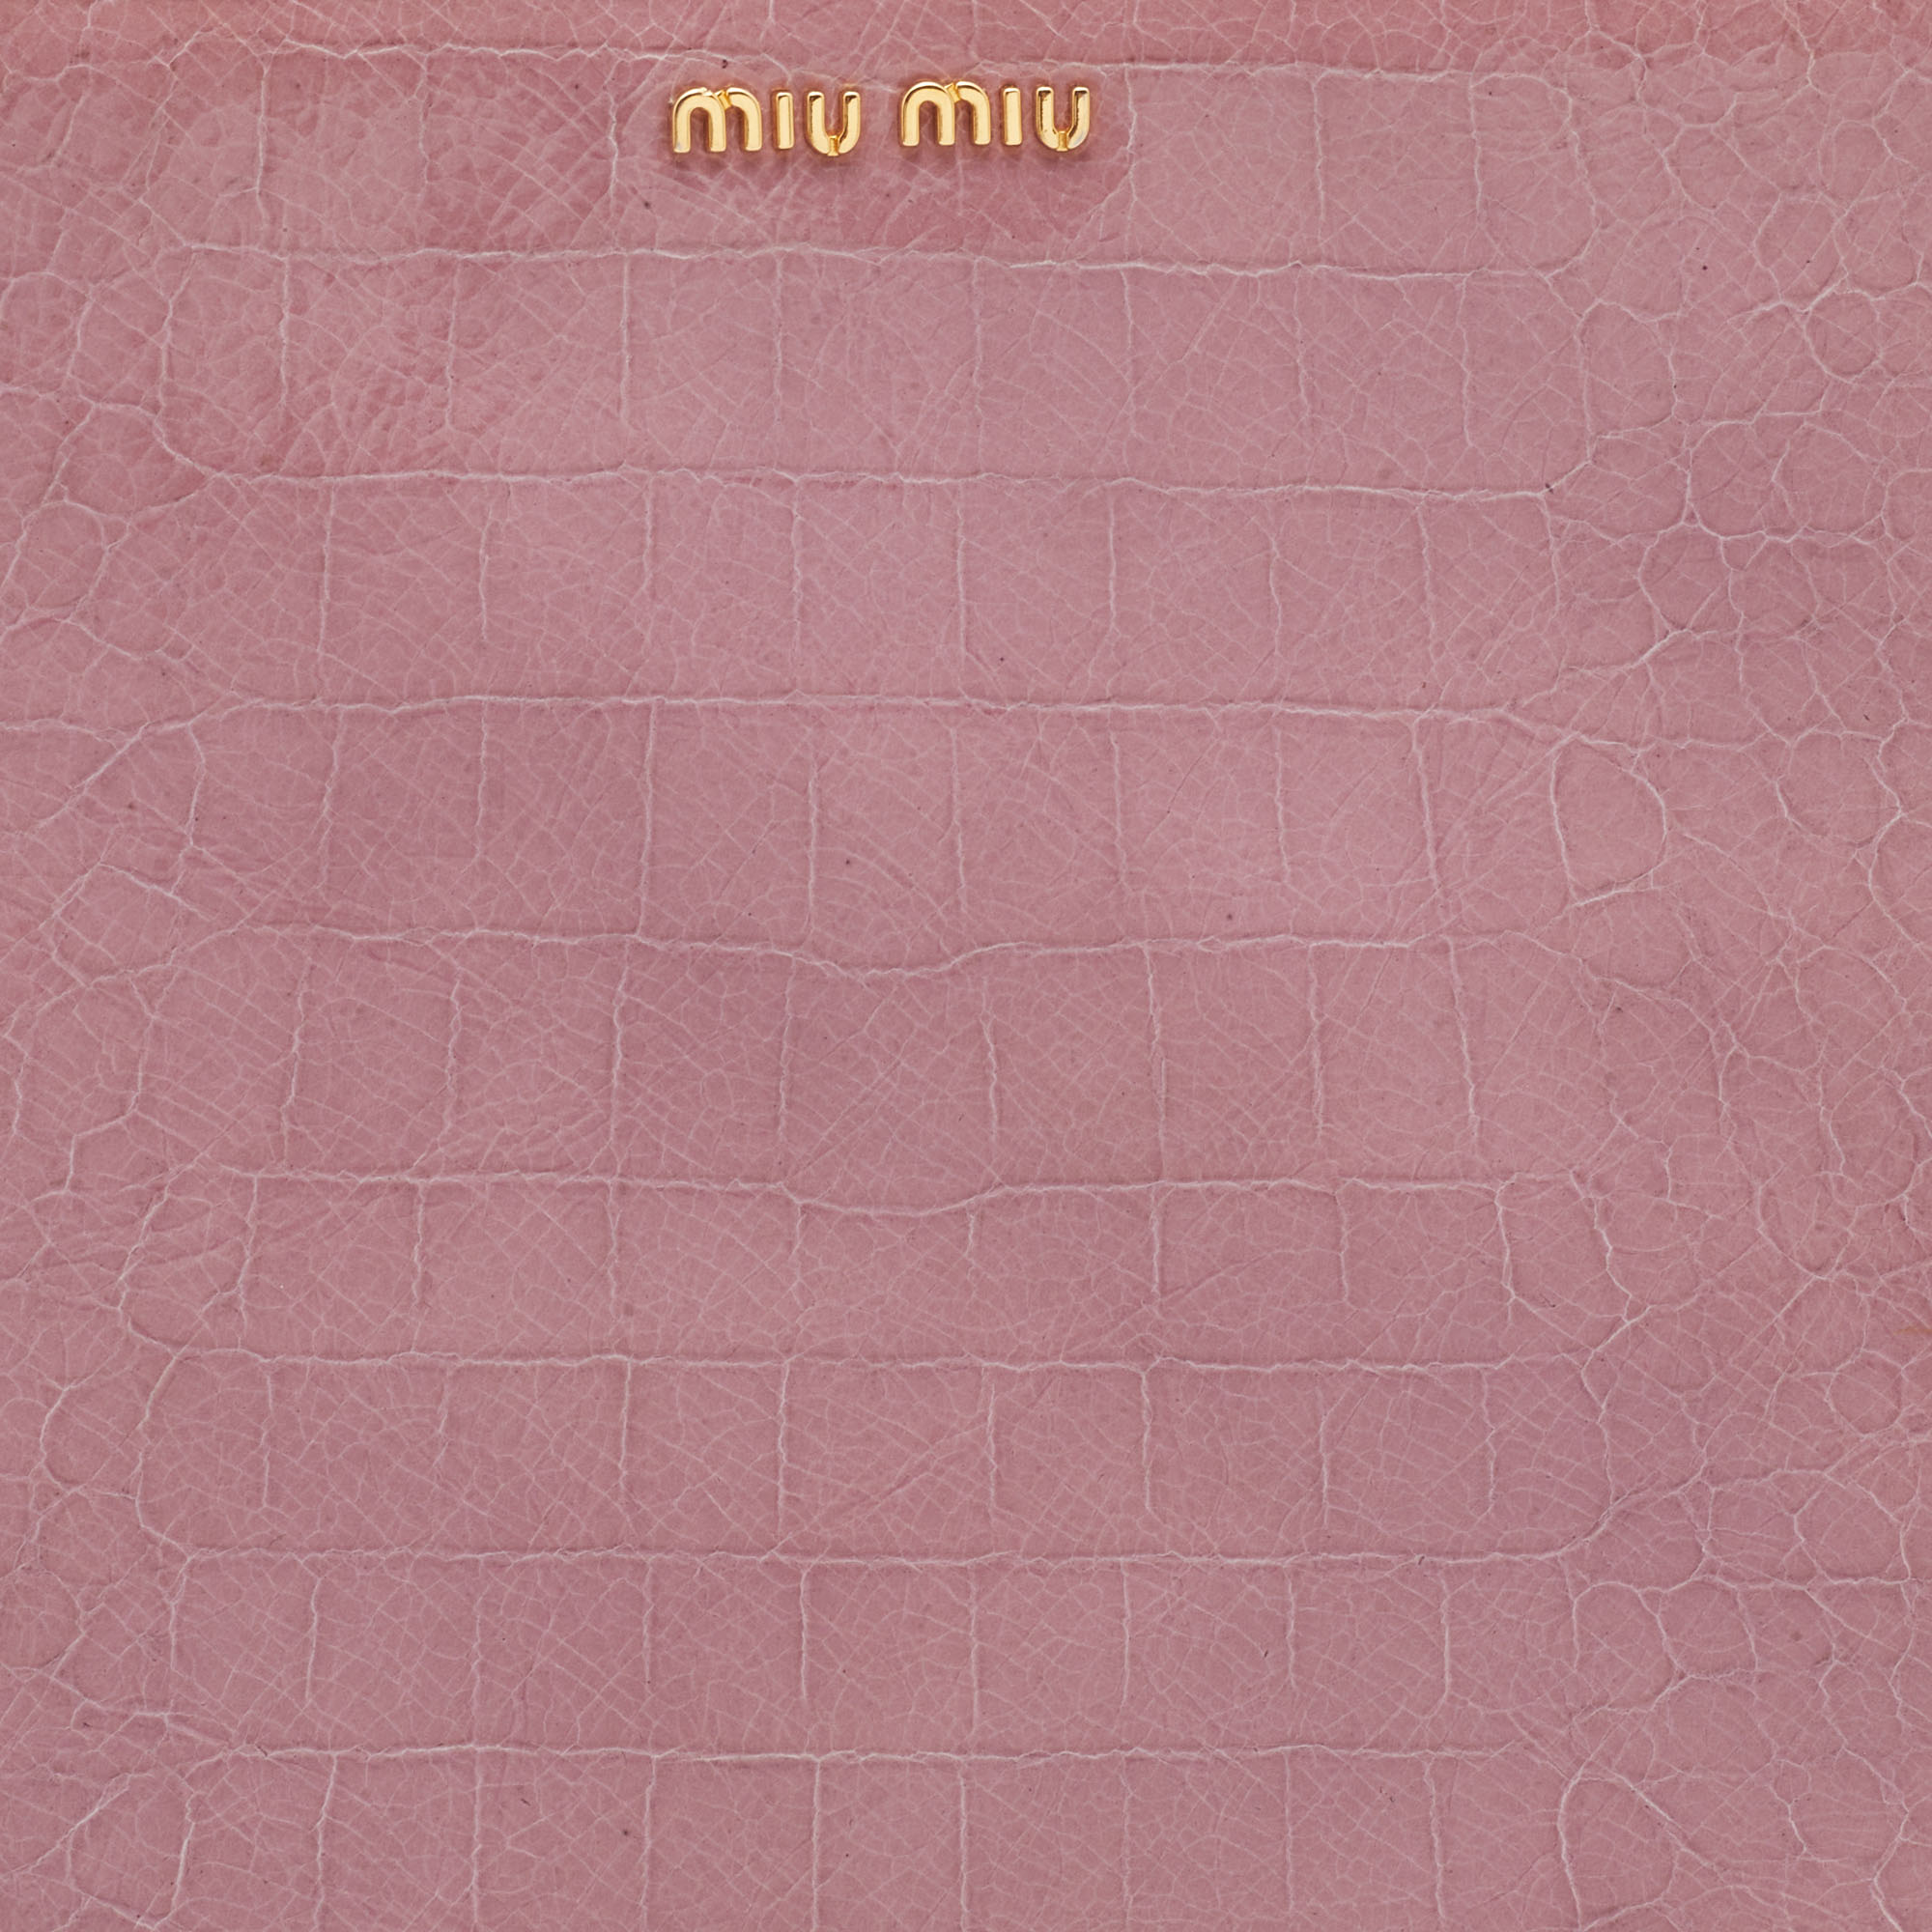 Miu Miu Pink Croc Embossed Patent Leather Zip Around IPad Cover